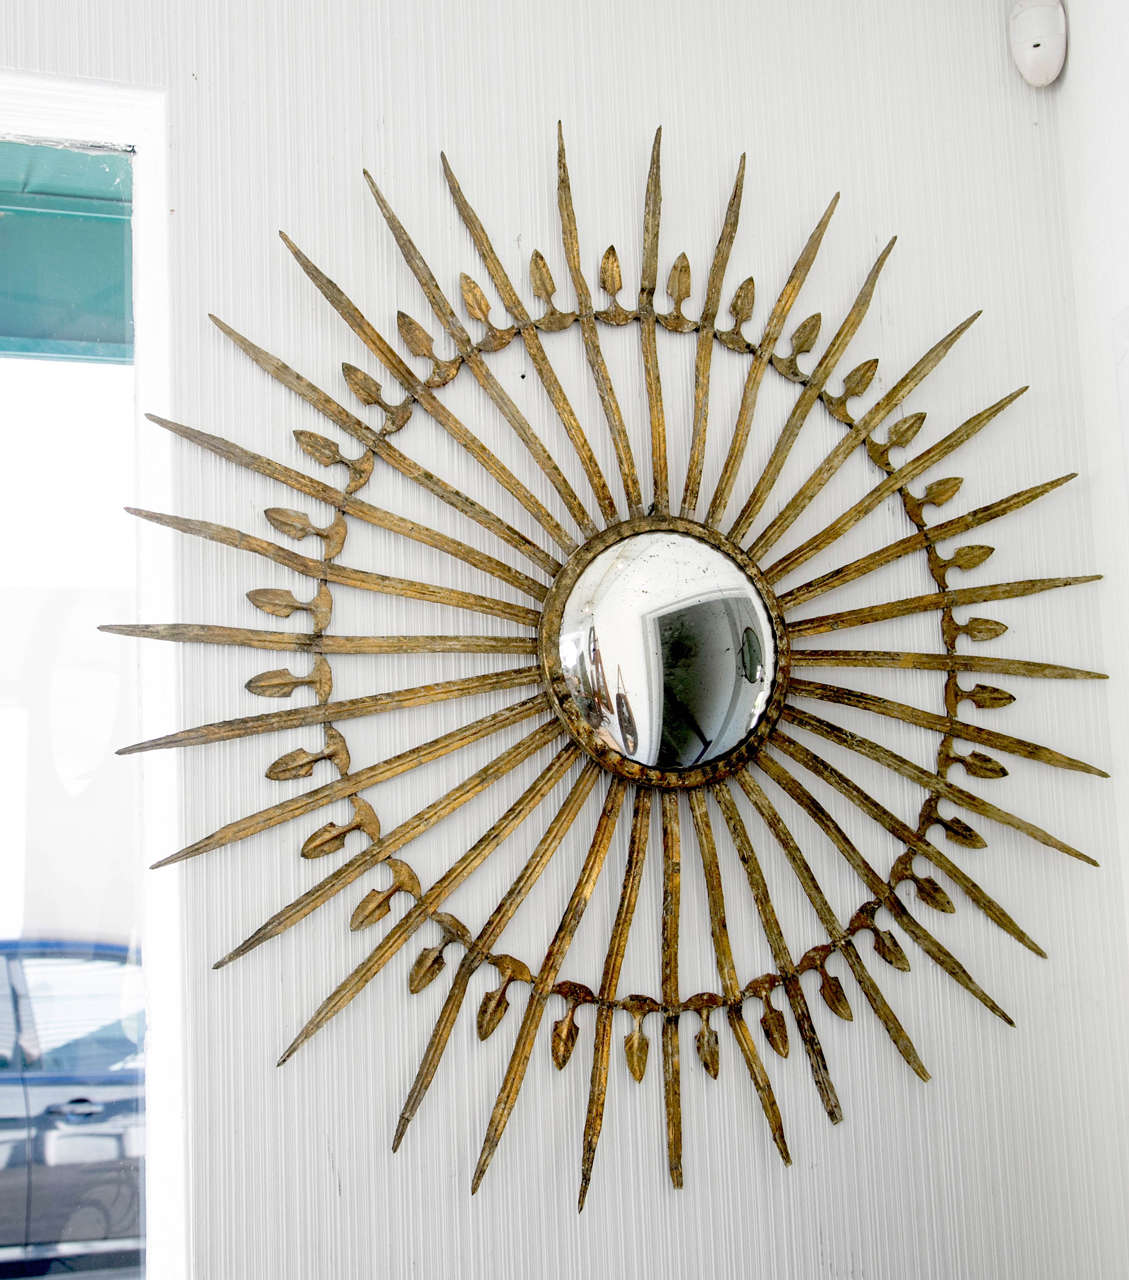 Metal starburst mirror with detailed arms.